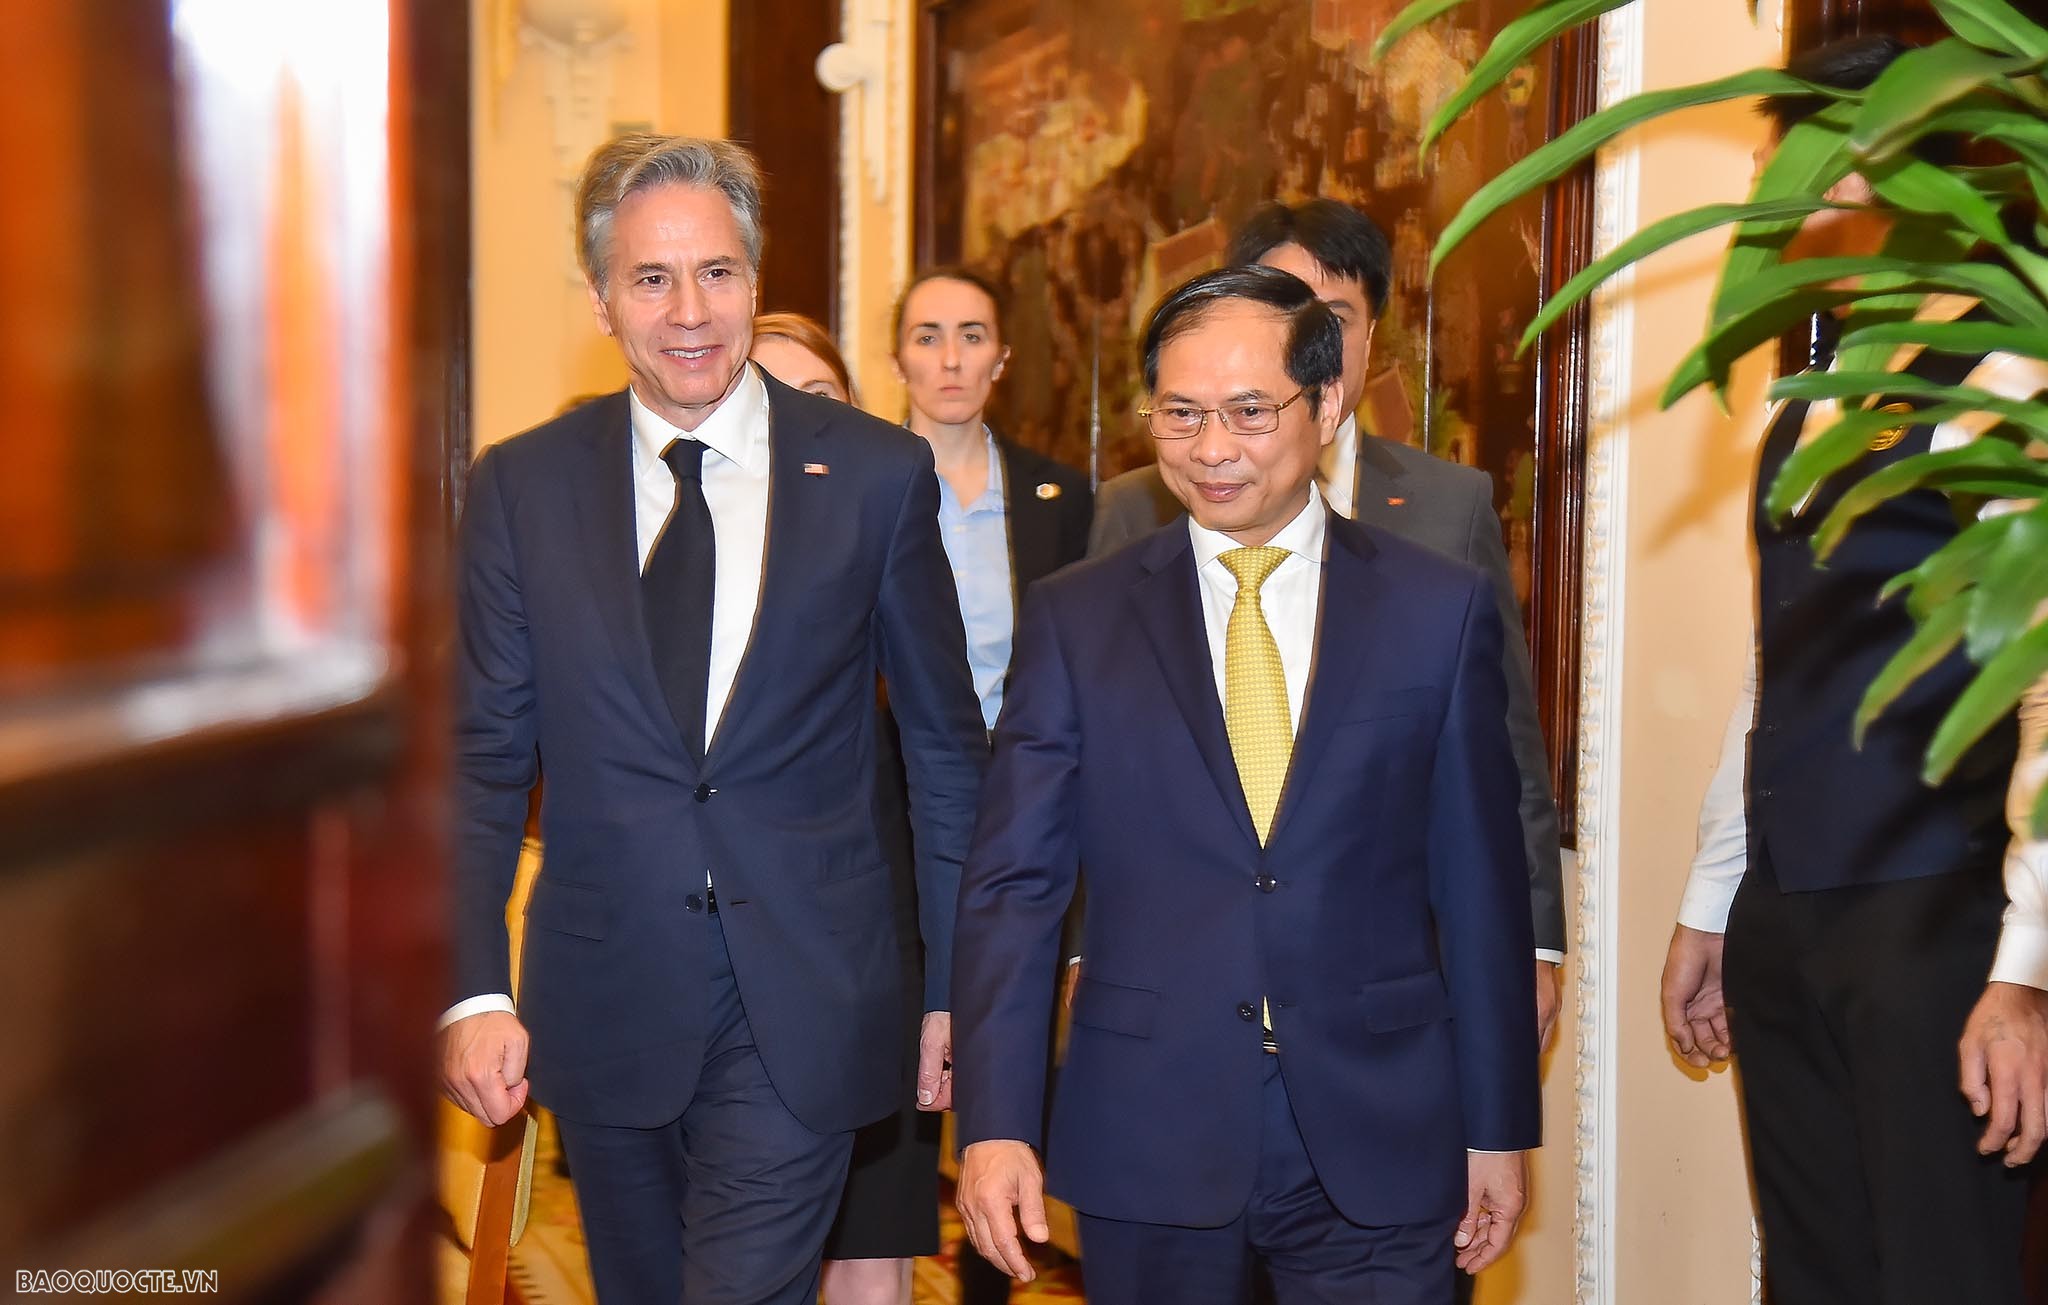 Foreign Minister Bui Thanh Son welcomed US Secretary of State Antony Blinken